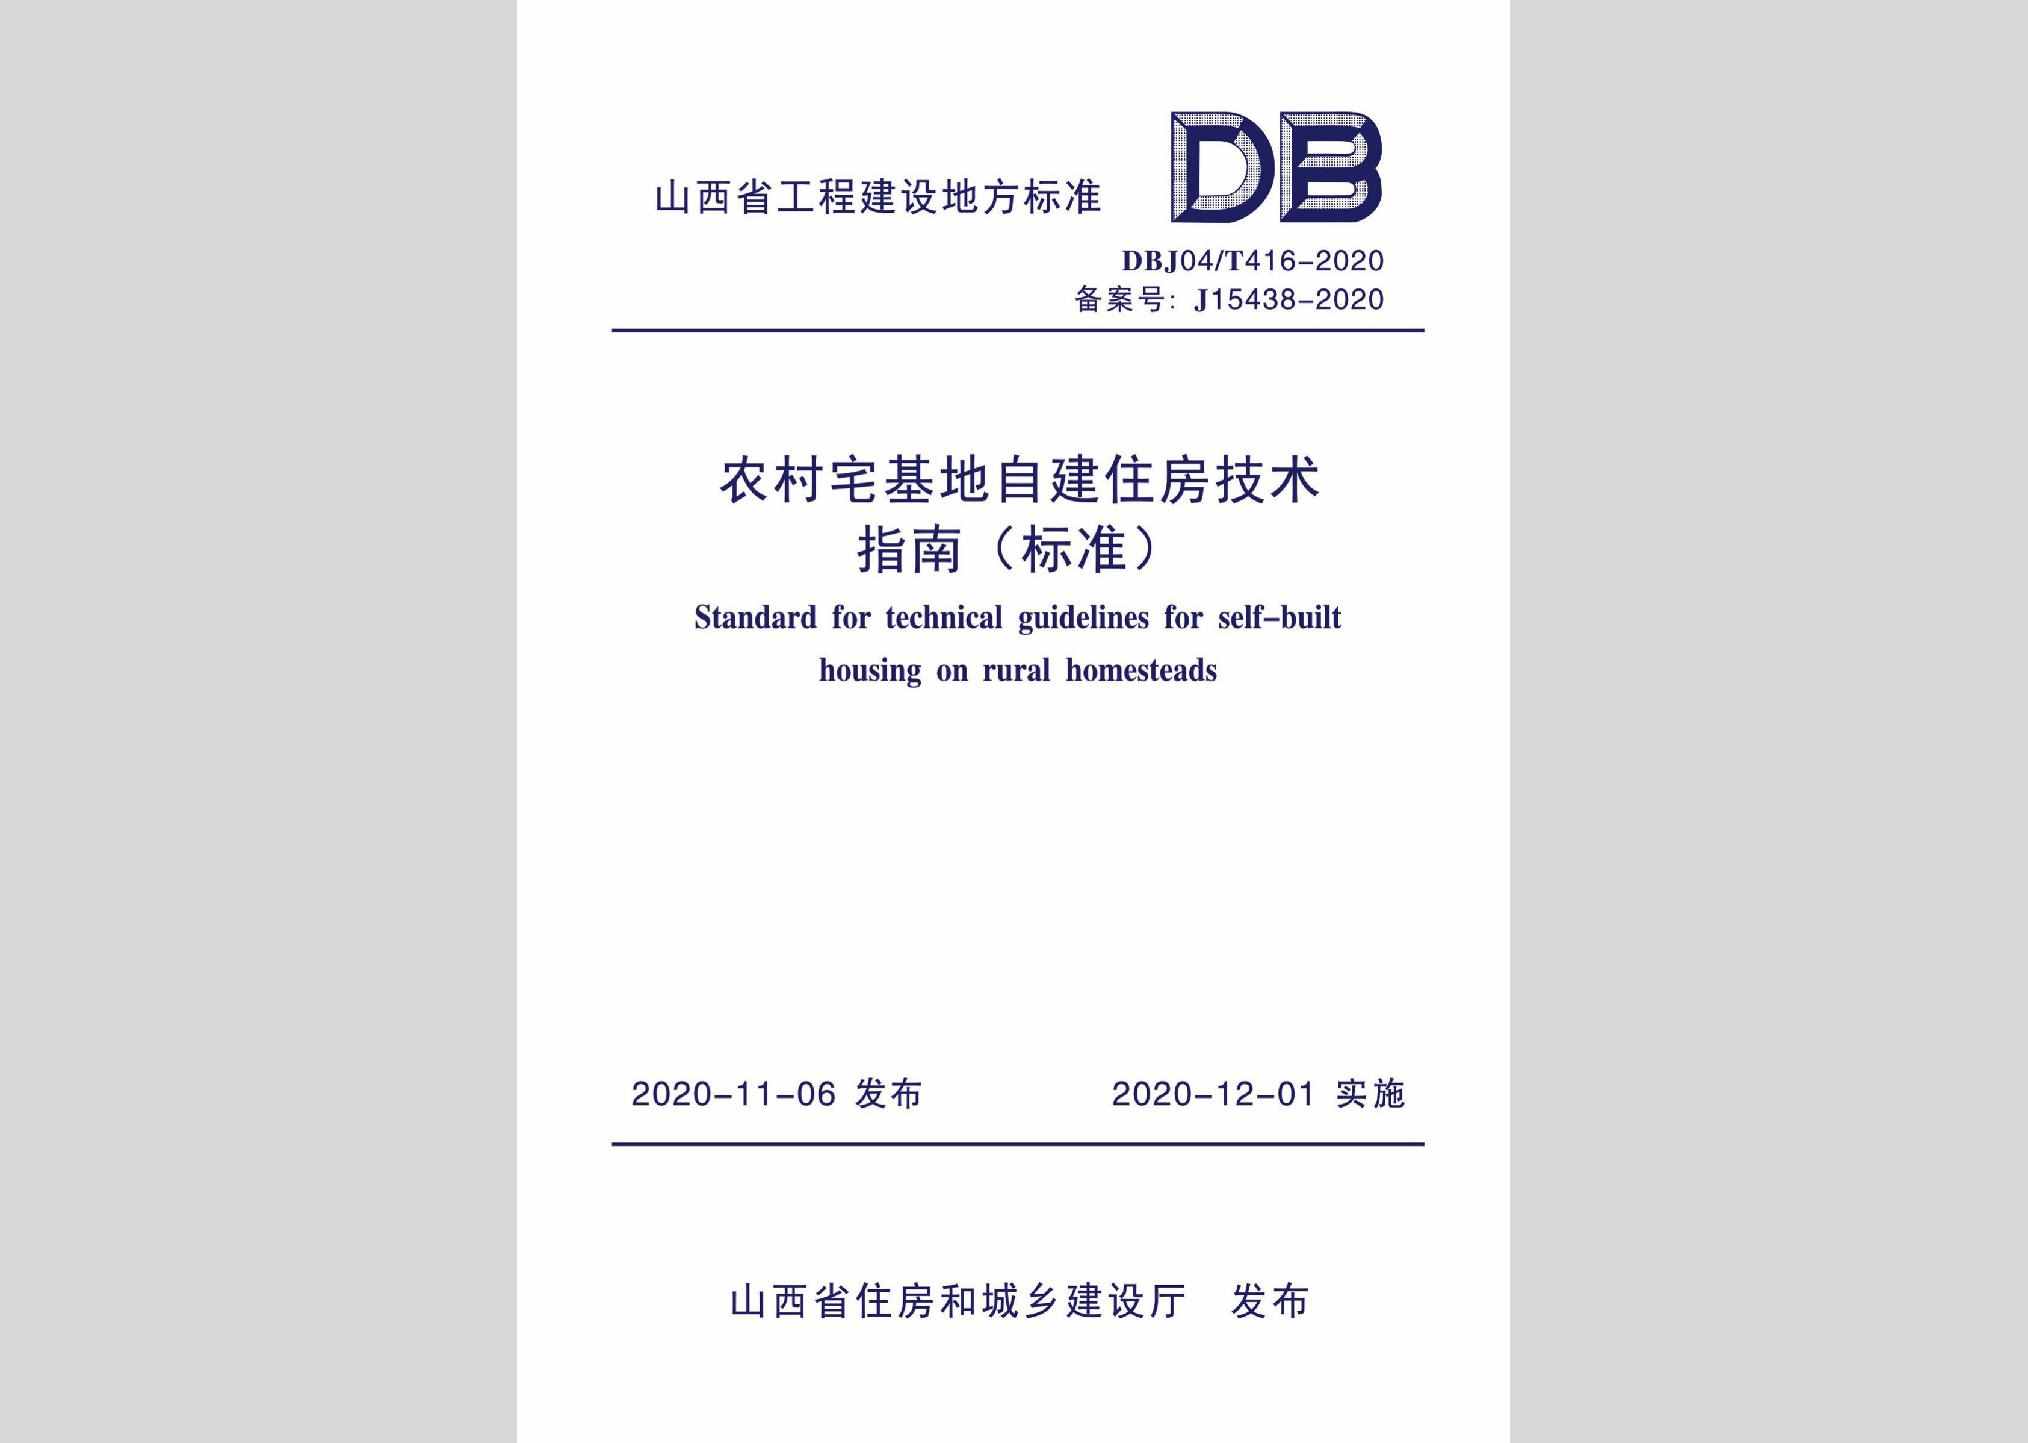 DBJ04/T416-2020：农村宅基地自建住房技术指南（标准）